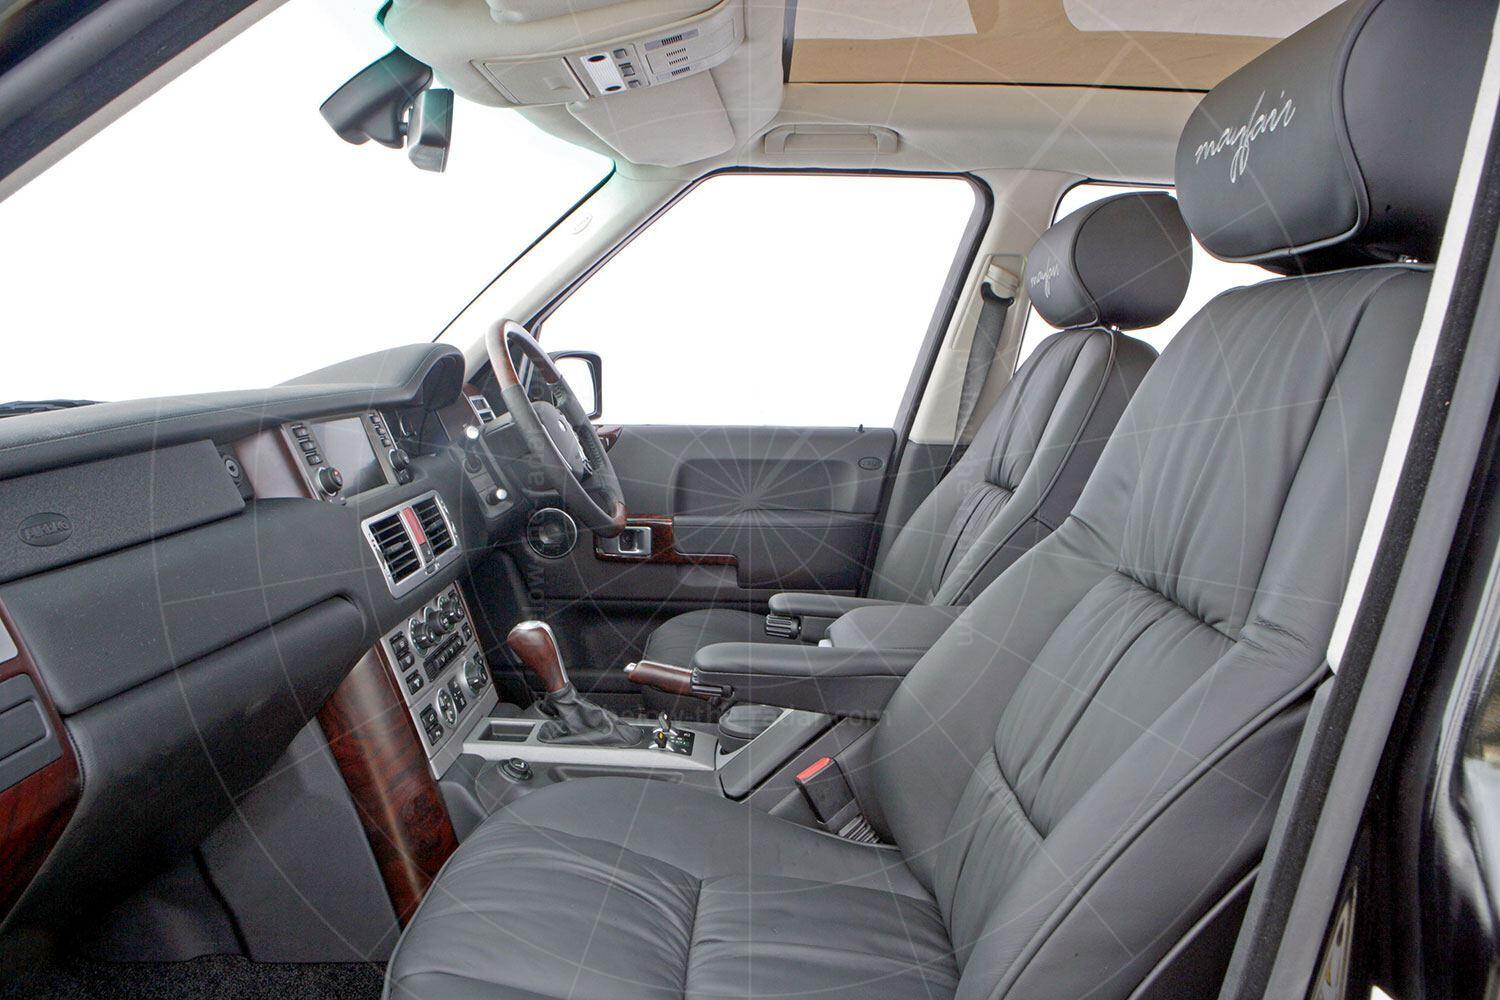 Range Rover Mayfair interior Pic: magiccarpics.co.uk | Range Rover Mayfair interior